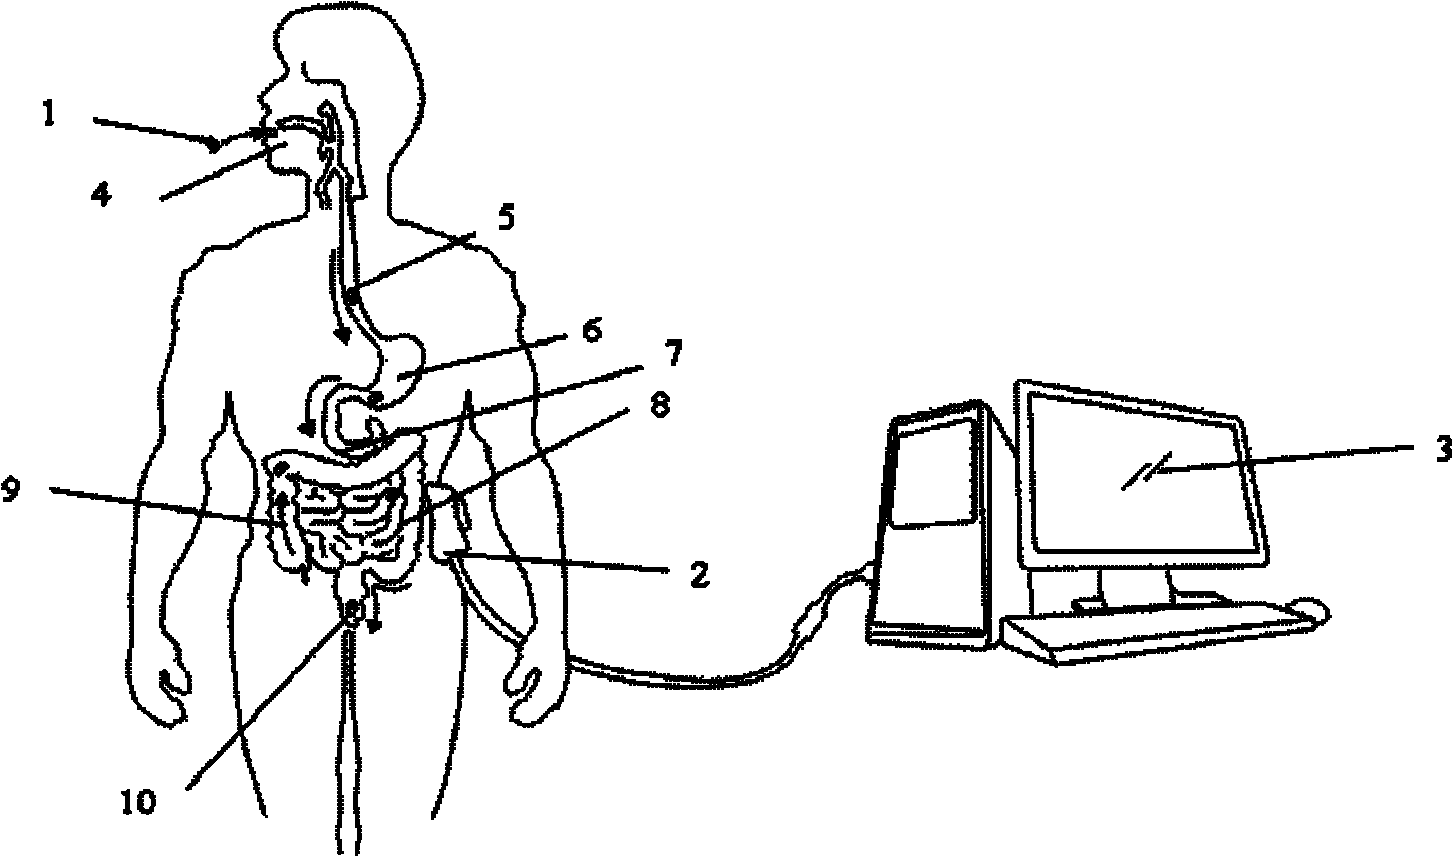 Color Doppler ultrasound capsule enteroscopy system